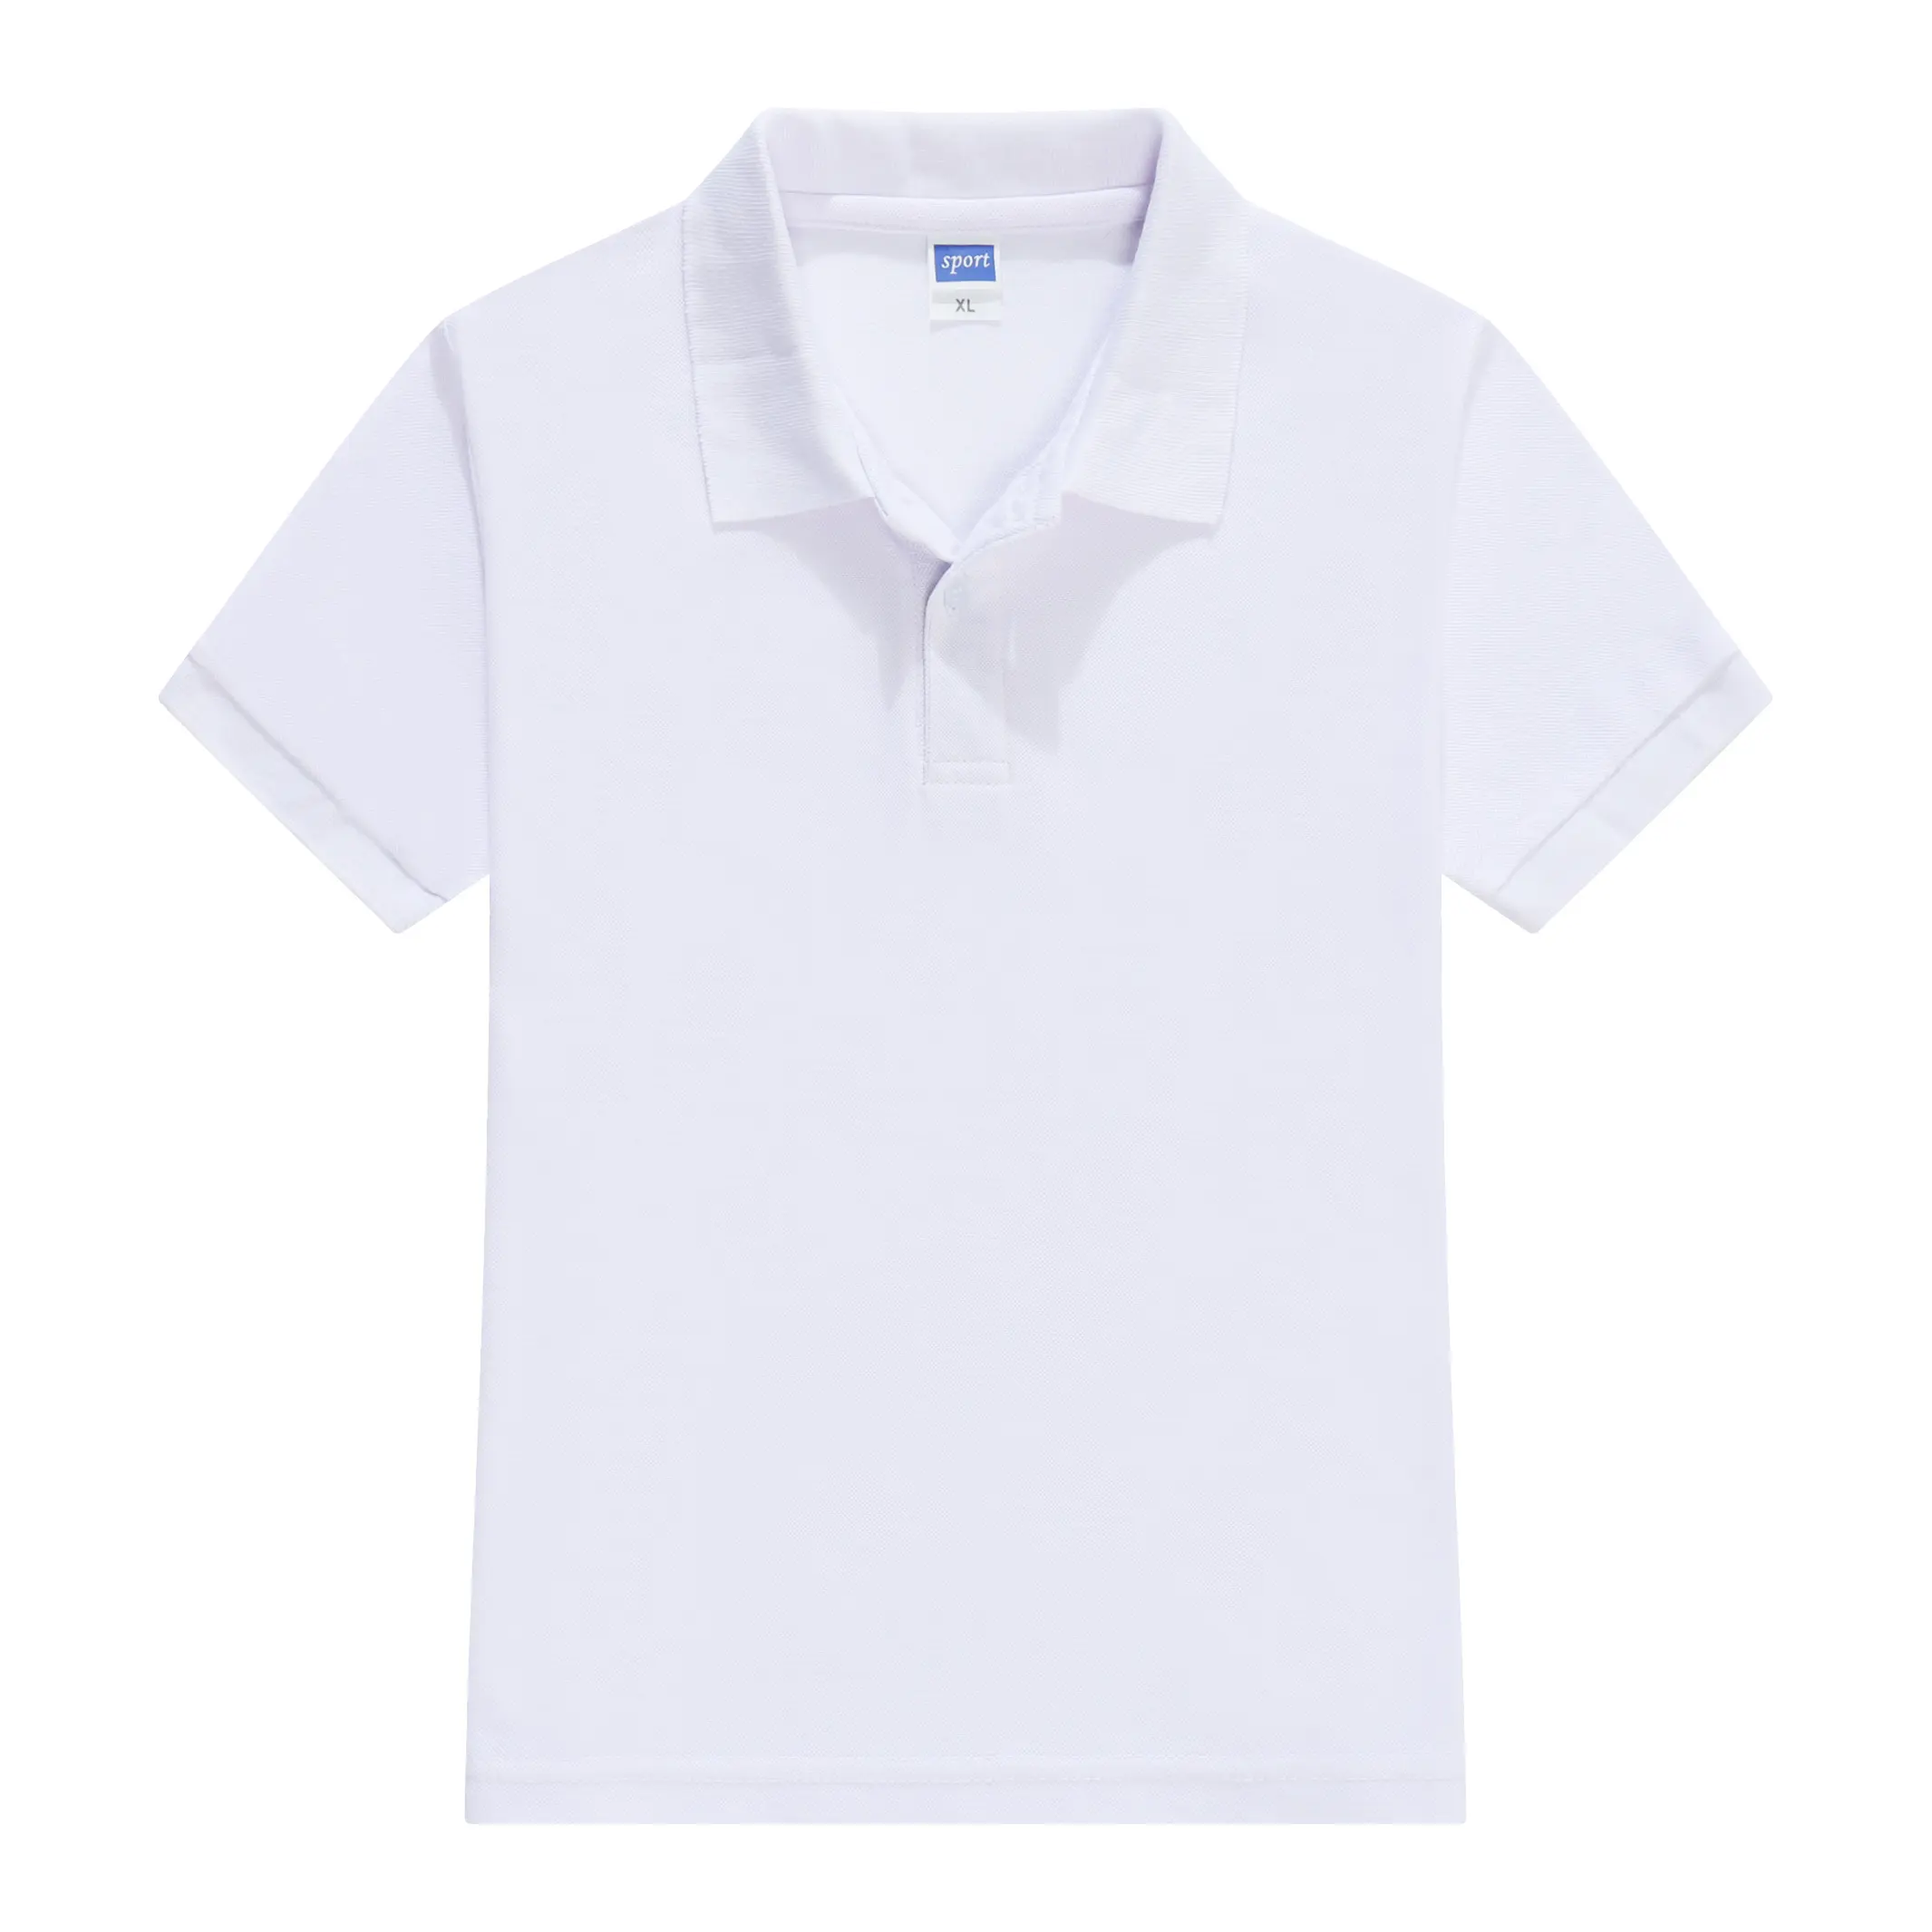 Rubysub RB-1870 Hoge Kwaliteit Kids Blank T-shirt Warmte-overdracht Afdrukken t-shirt Groothandel Voor Jongens/Meisjes